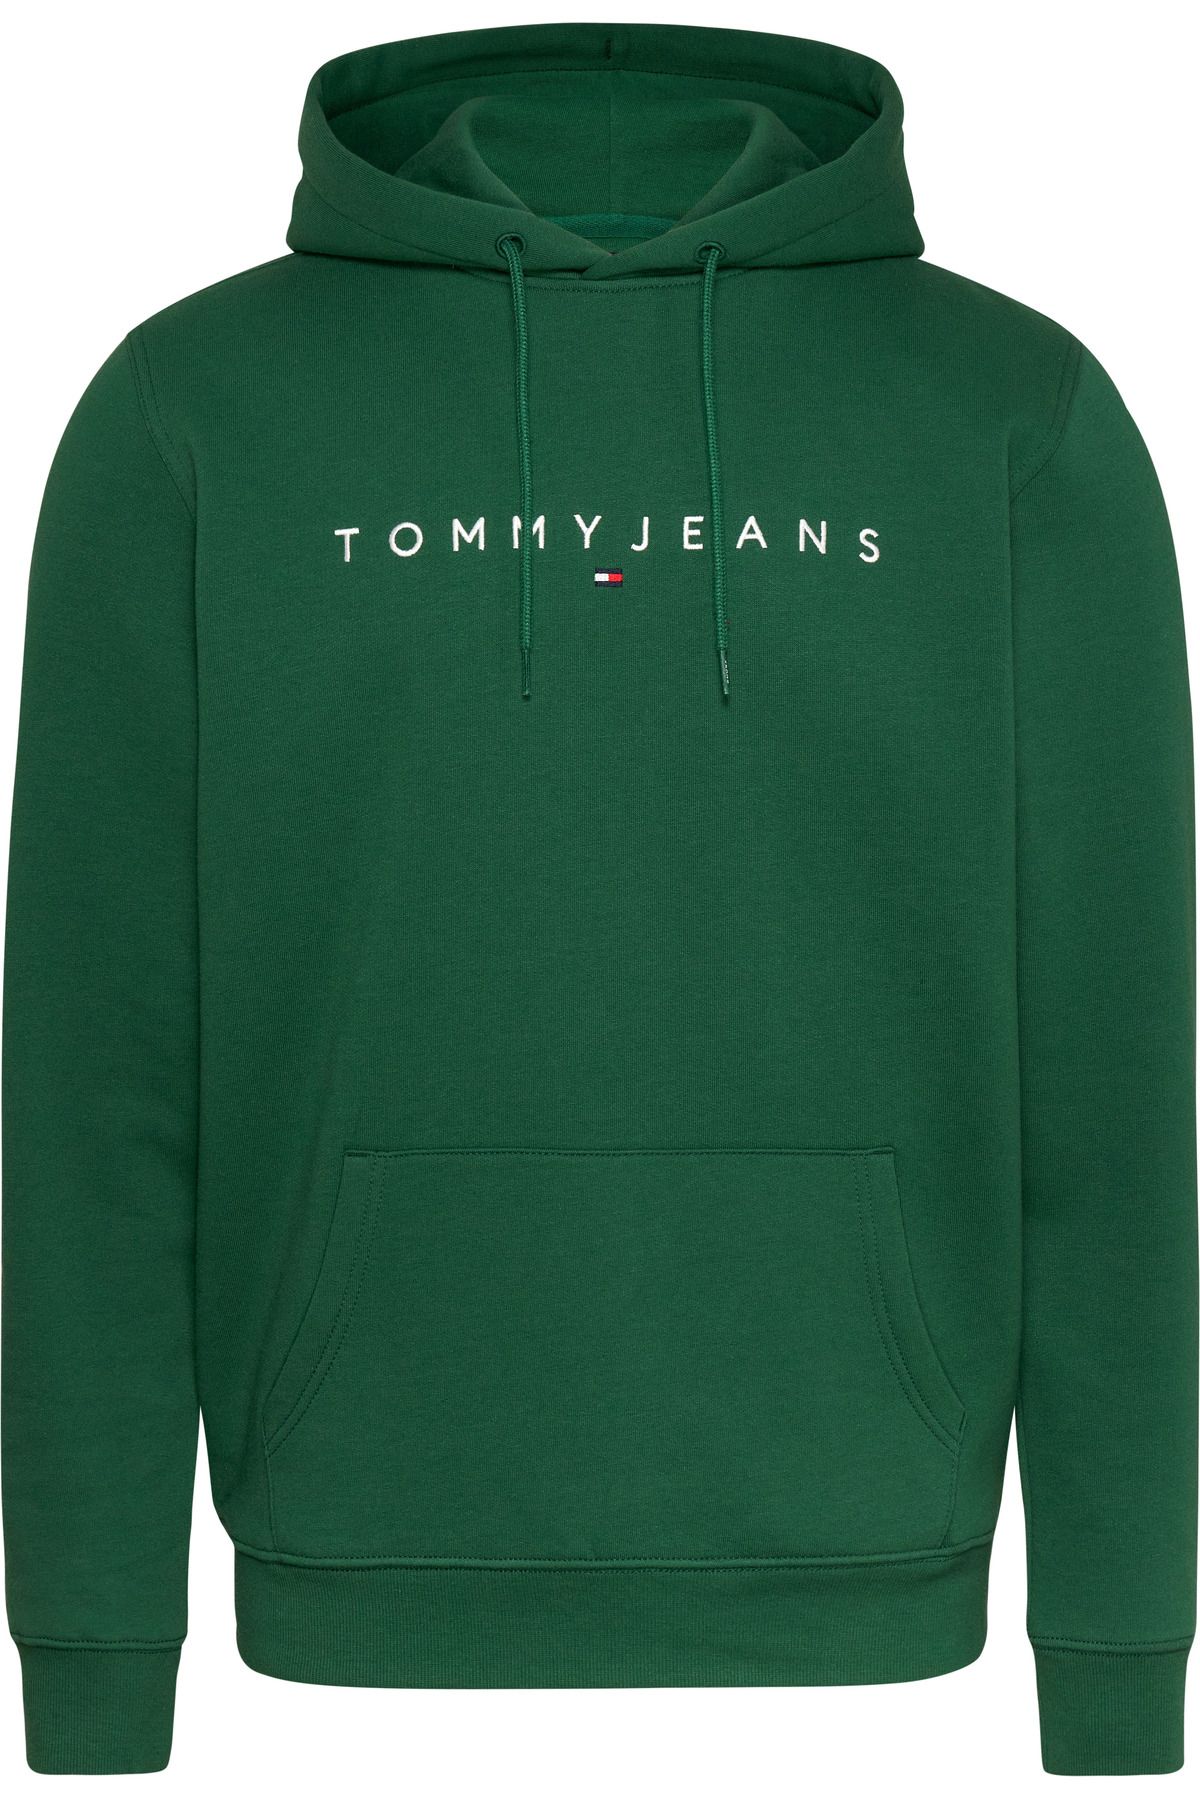 Tommy Hilfiger Erkek Marka Logolu Kapüşonlu Şık Görünüşlü Yeşil Sweatshirt Dm0dm17985-l4l